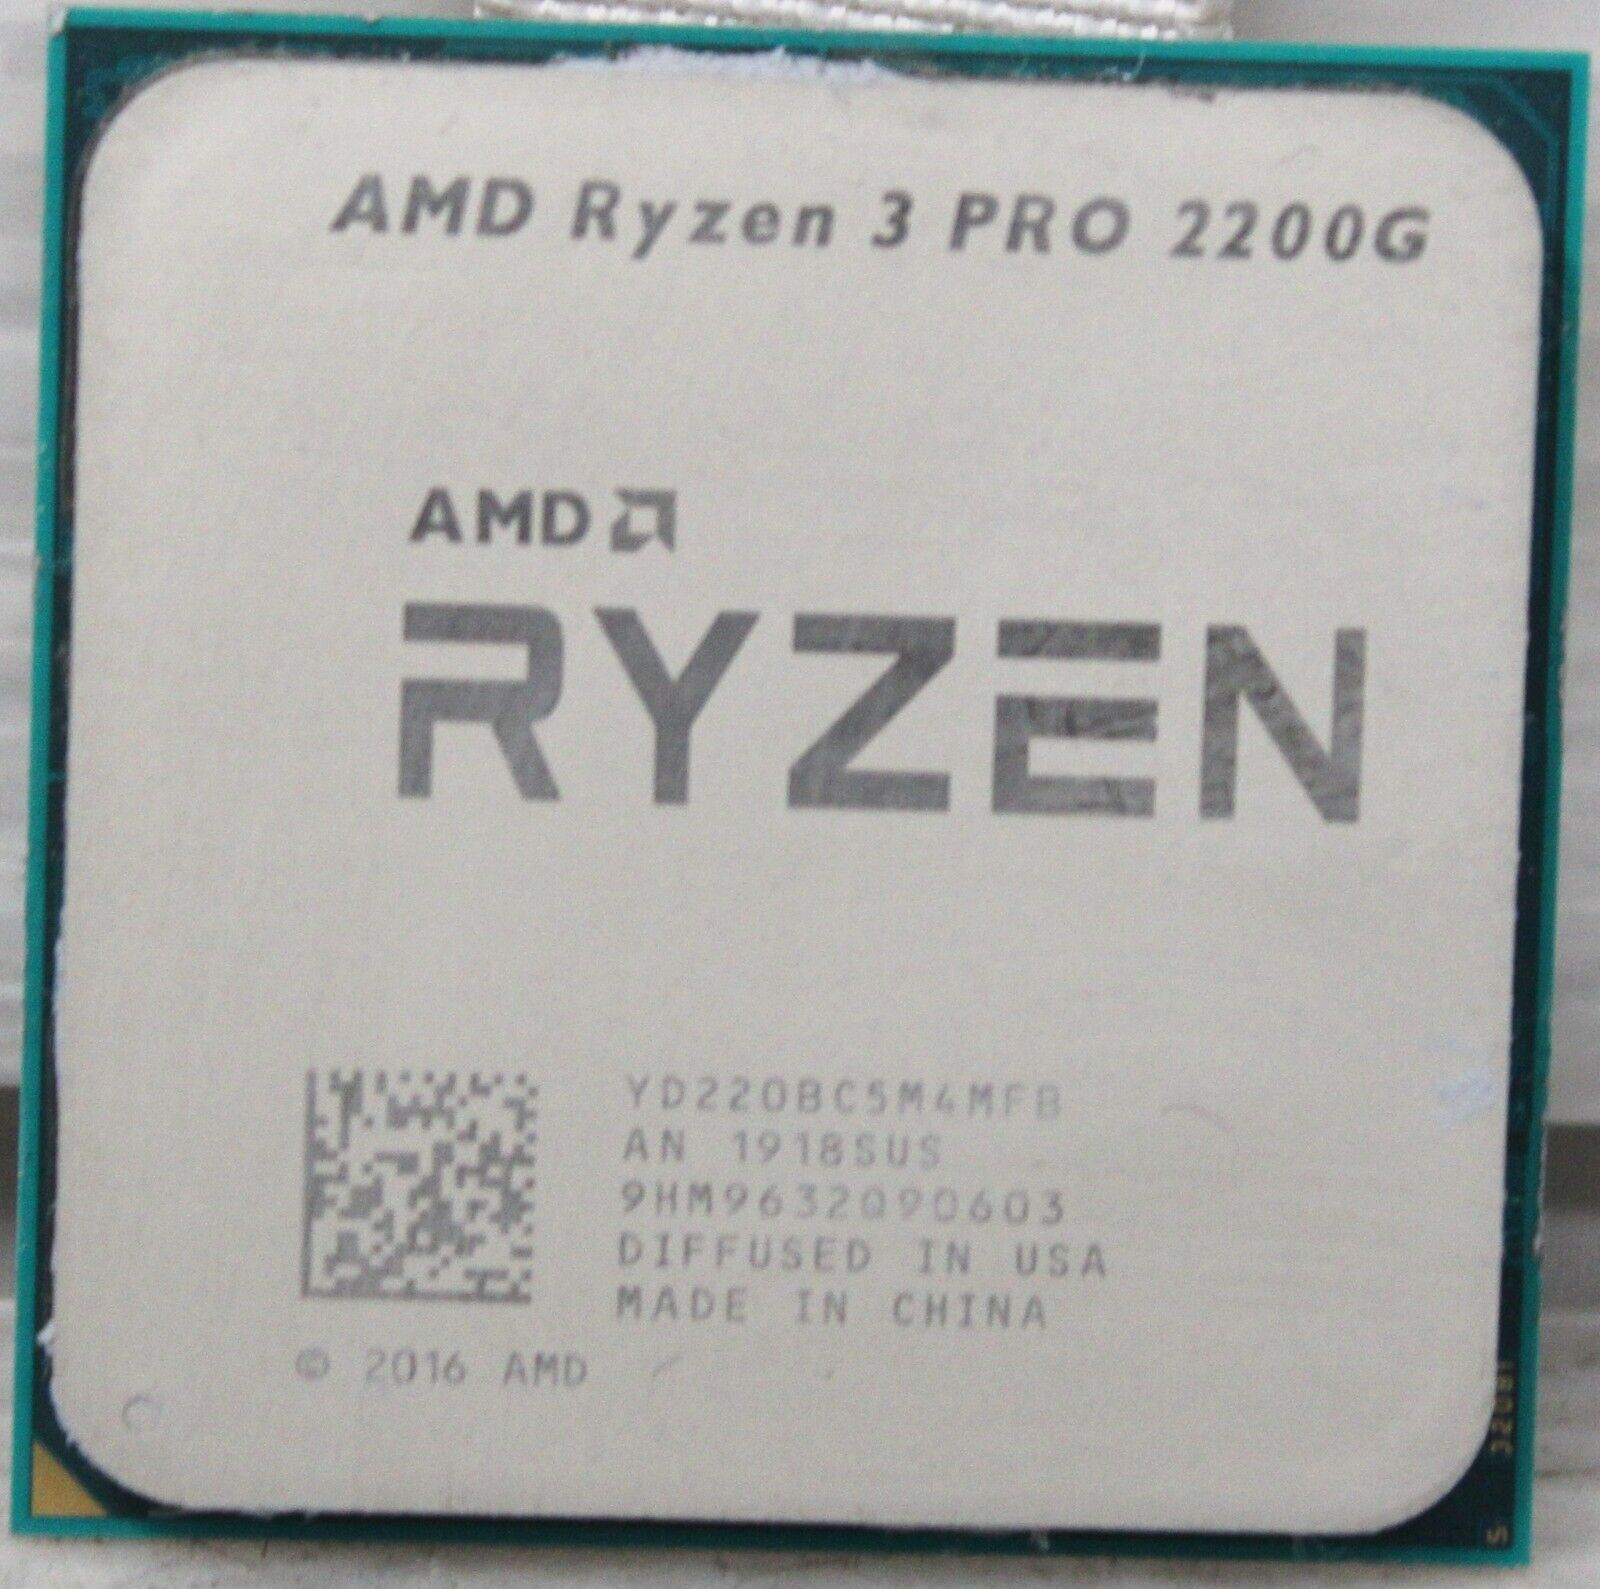 AMD RYZEN 3 PRO 2200G CPU Processor